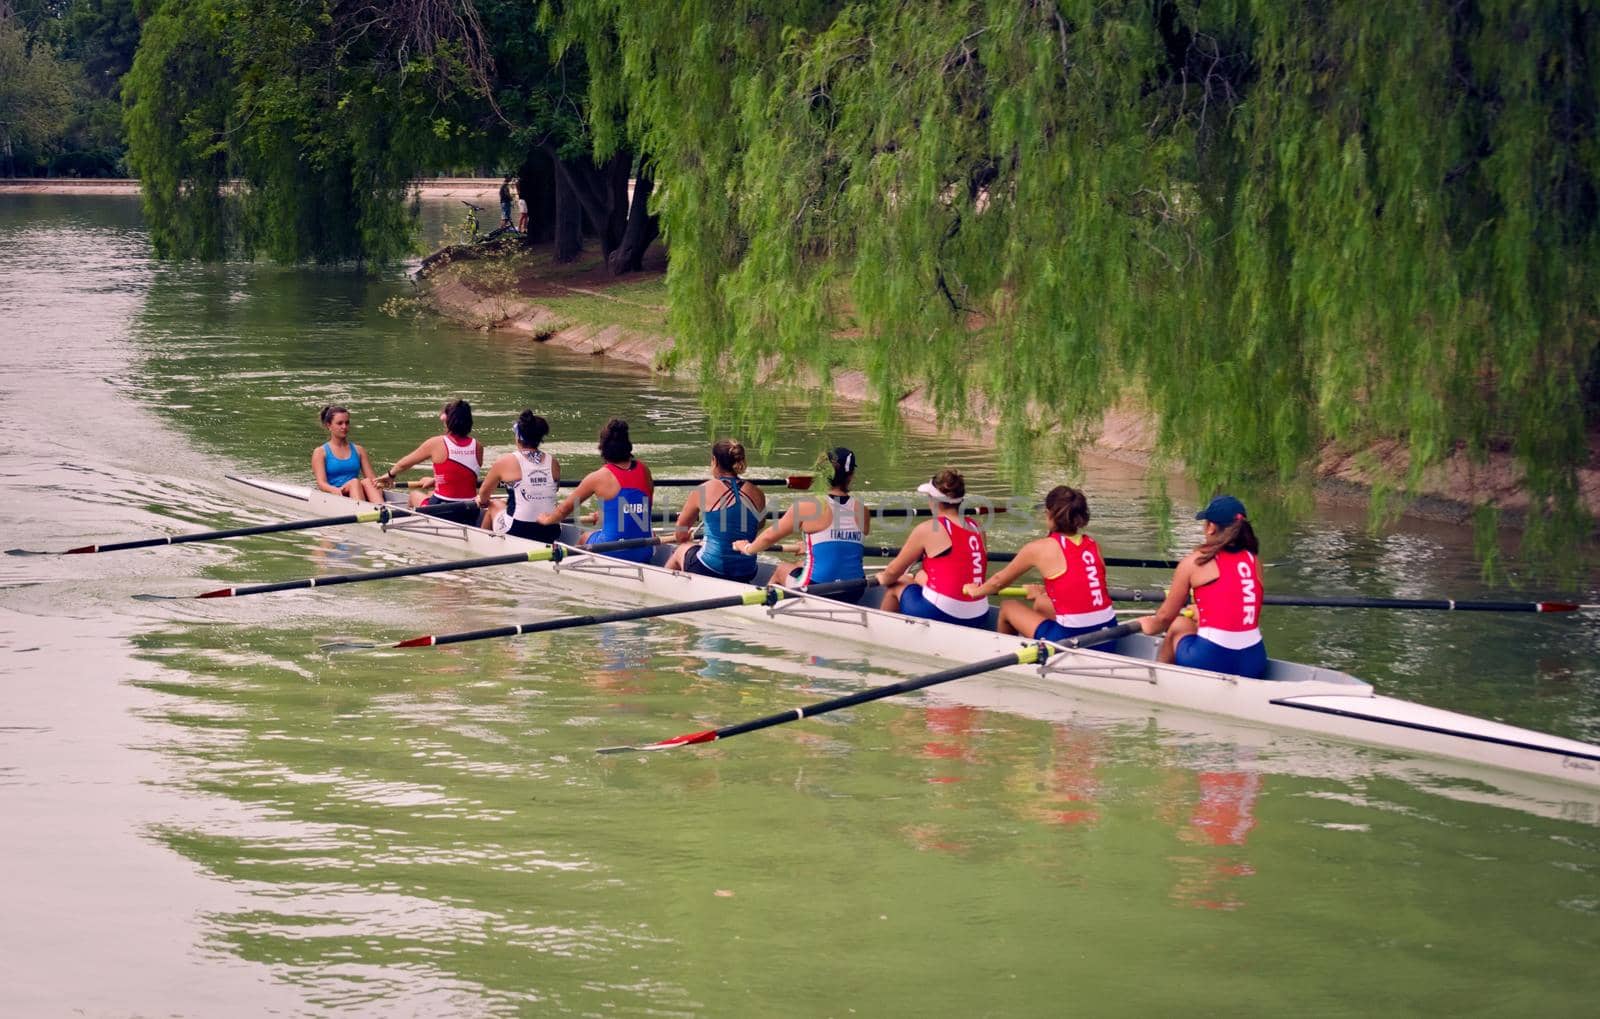 2021-02-11 - Girls rowing team of Mendoza Regatta Club training in the lake of San Martin park in Mendoza, Argentina. by hernan_hyper